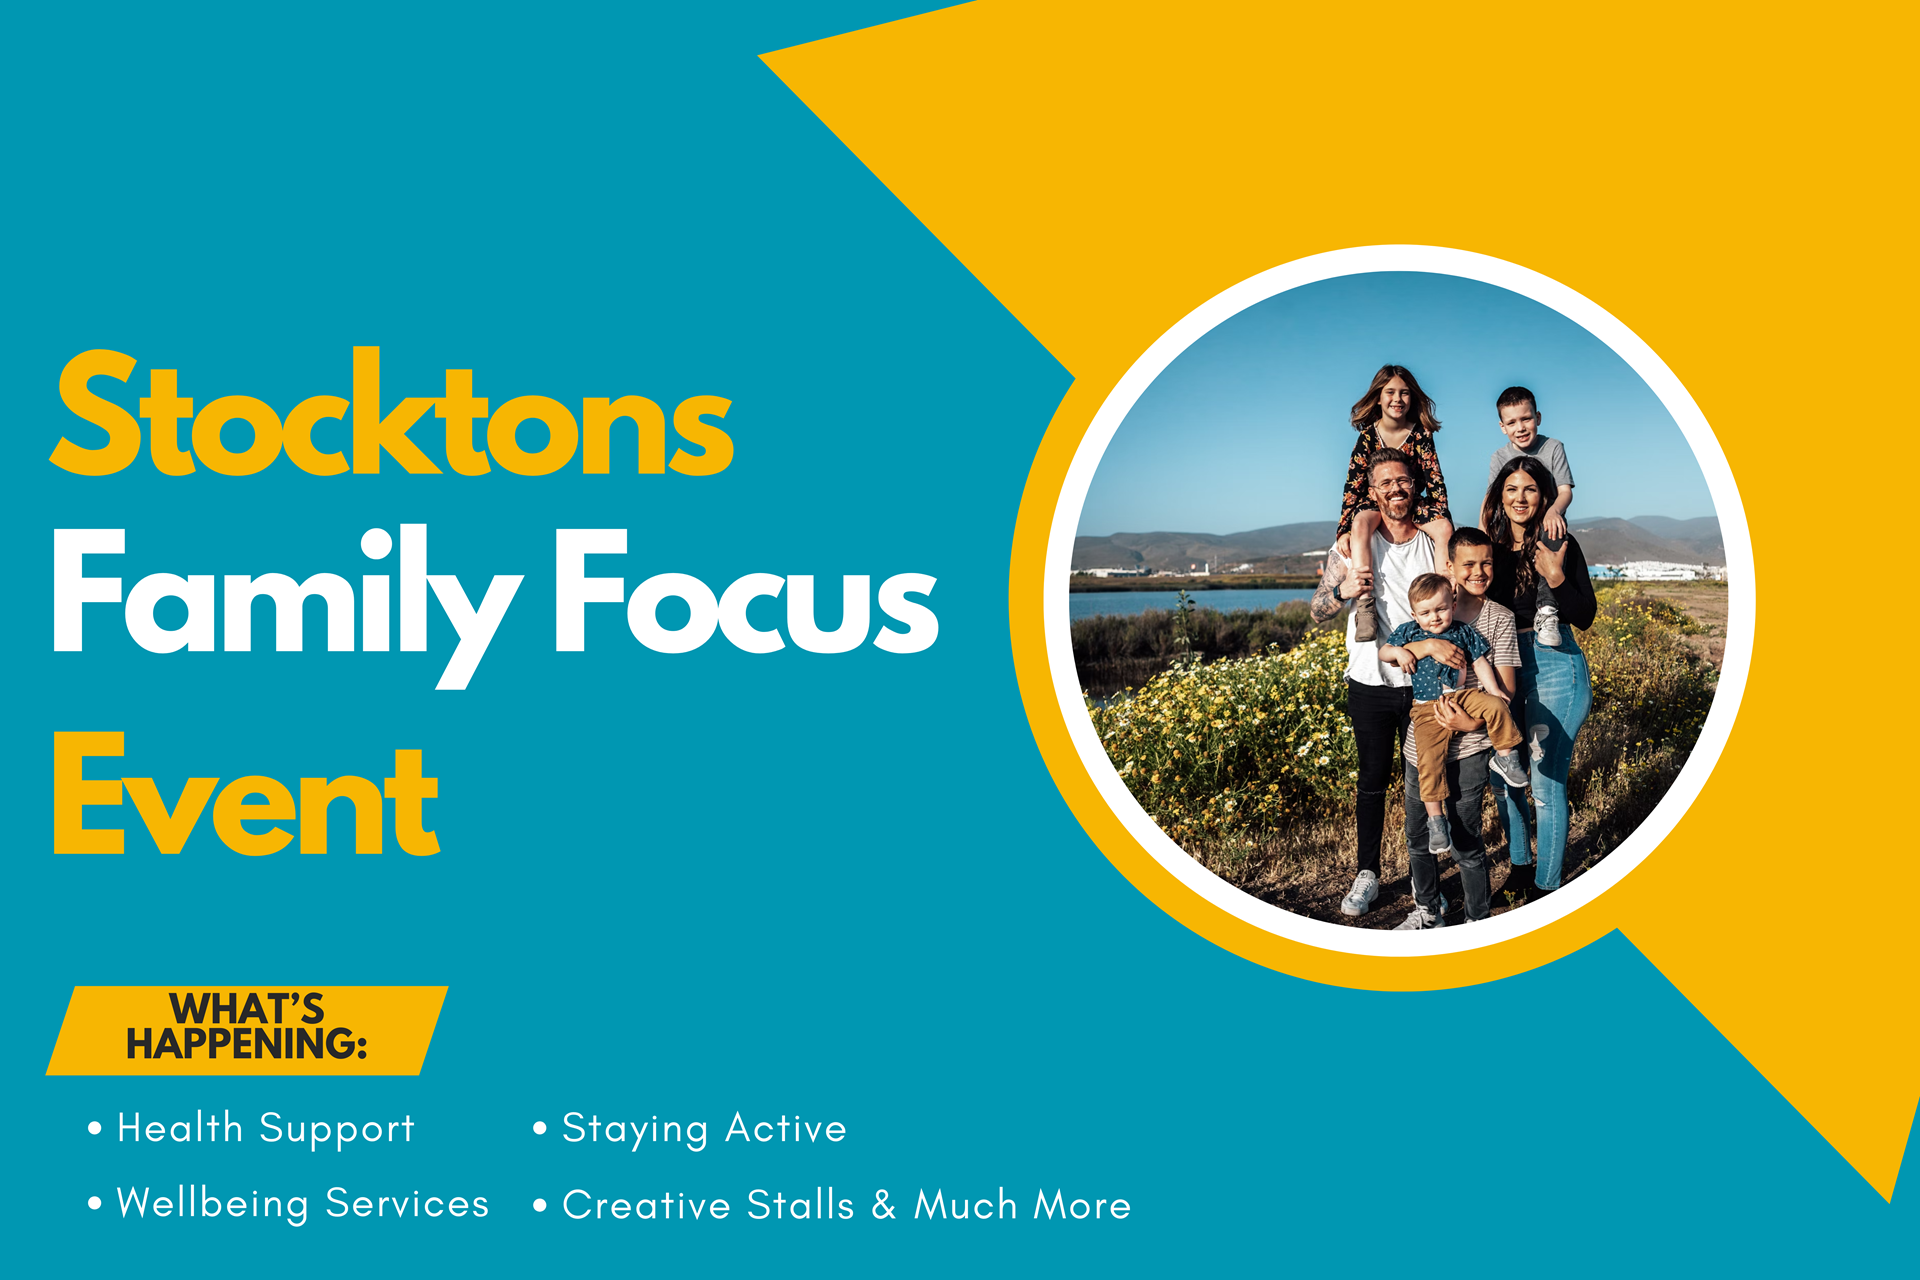 Stockton's Family Focus Event